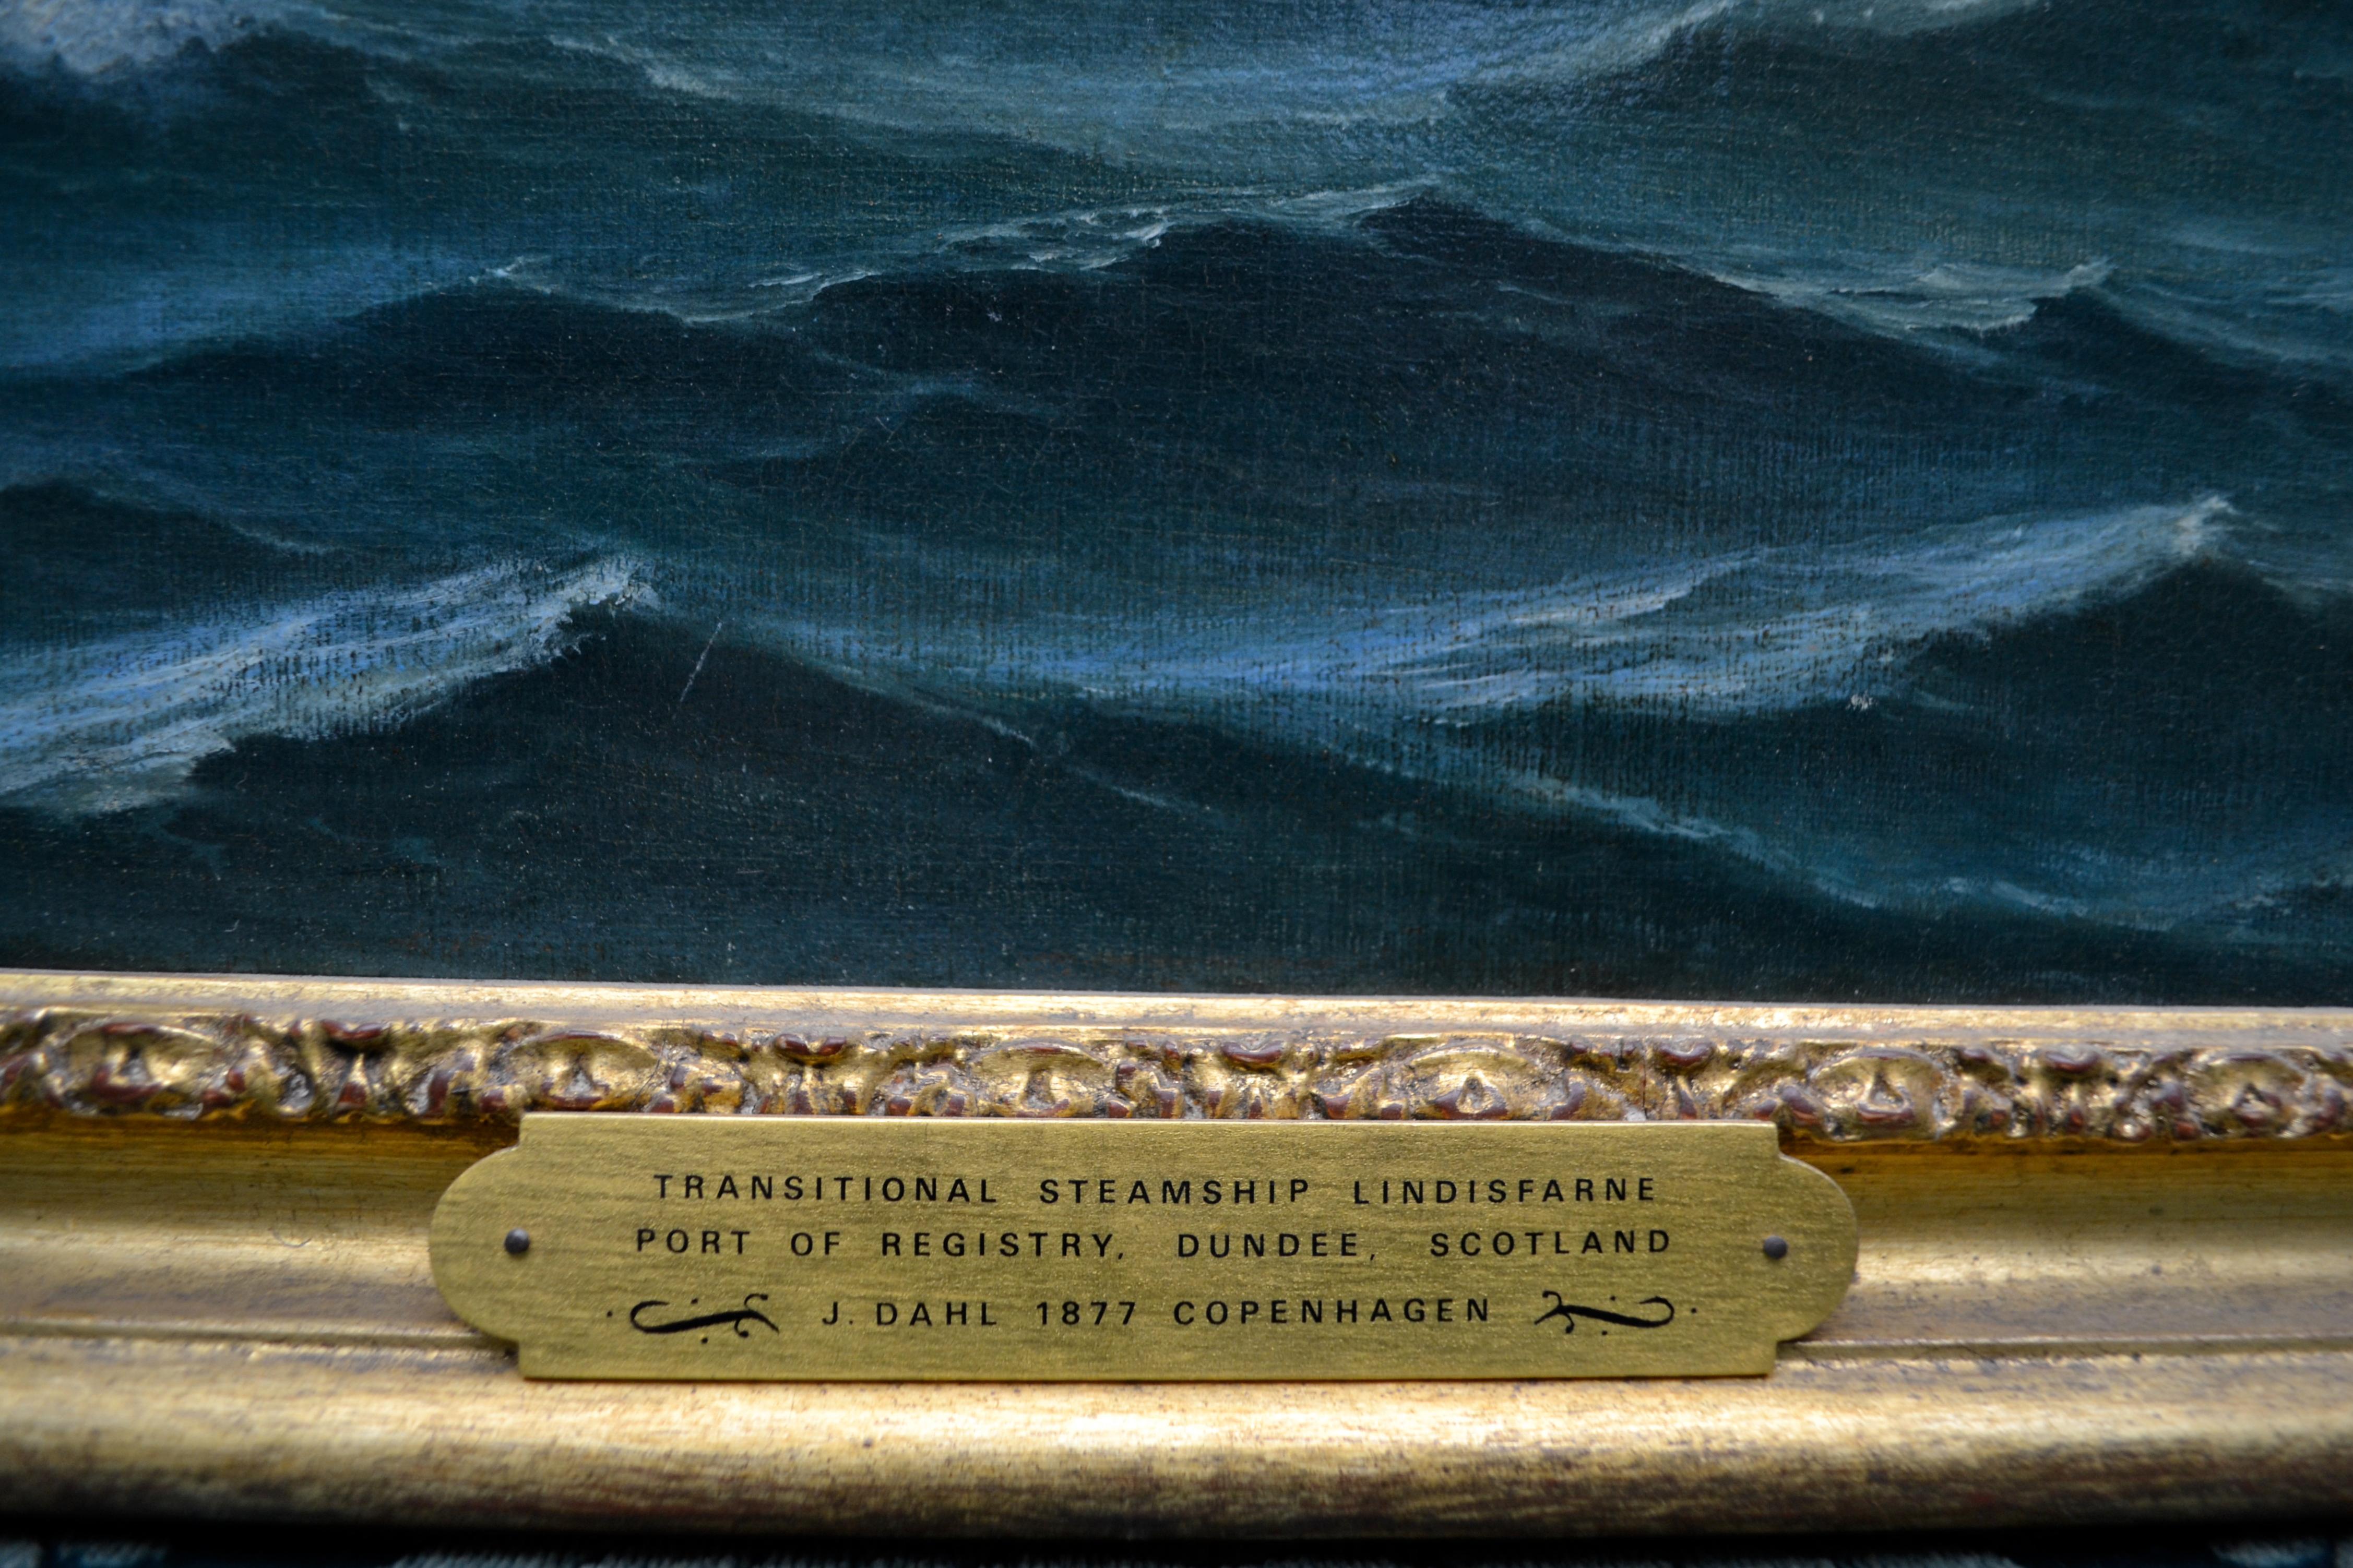 Other Dundee Steamship “Lindisfarne” by Danish 19th Century Artist Jorgen Dahl